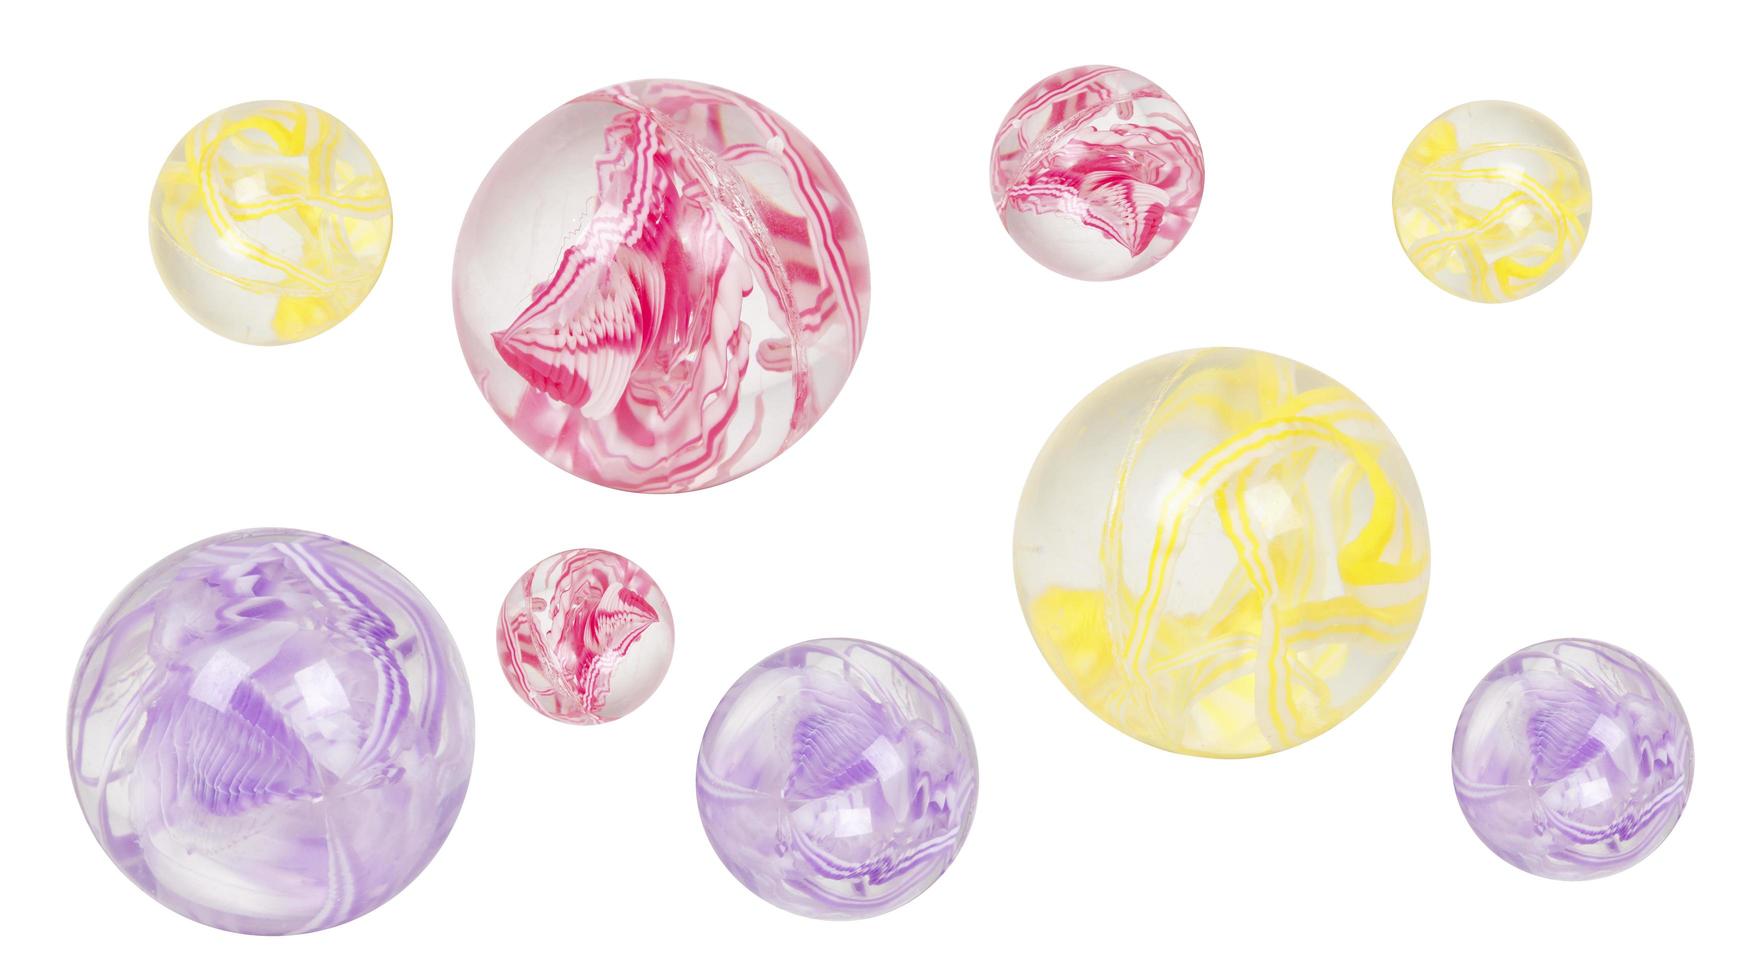 esferas coloridas de bolas de vidro isoladas no fundo branco com traçado de recorte foto